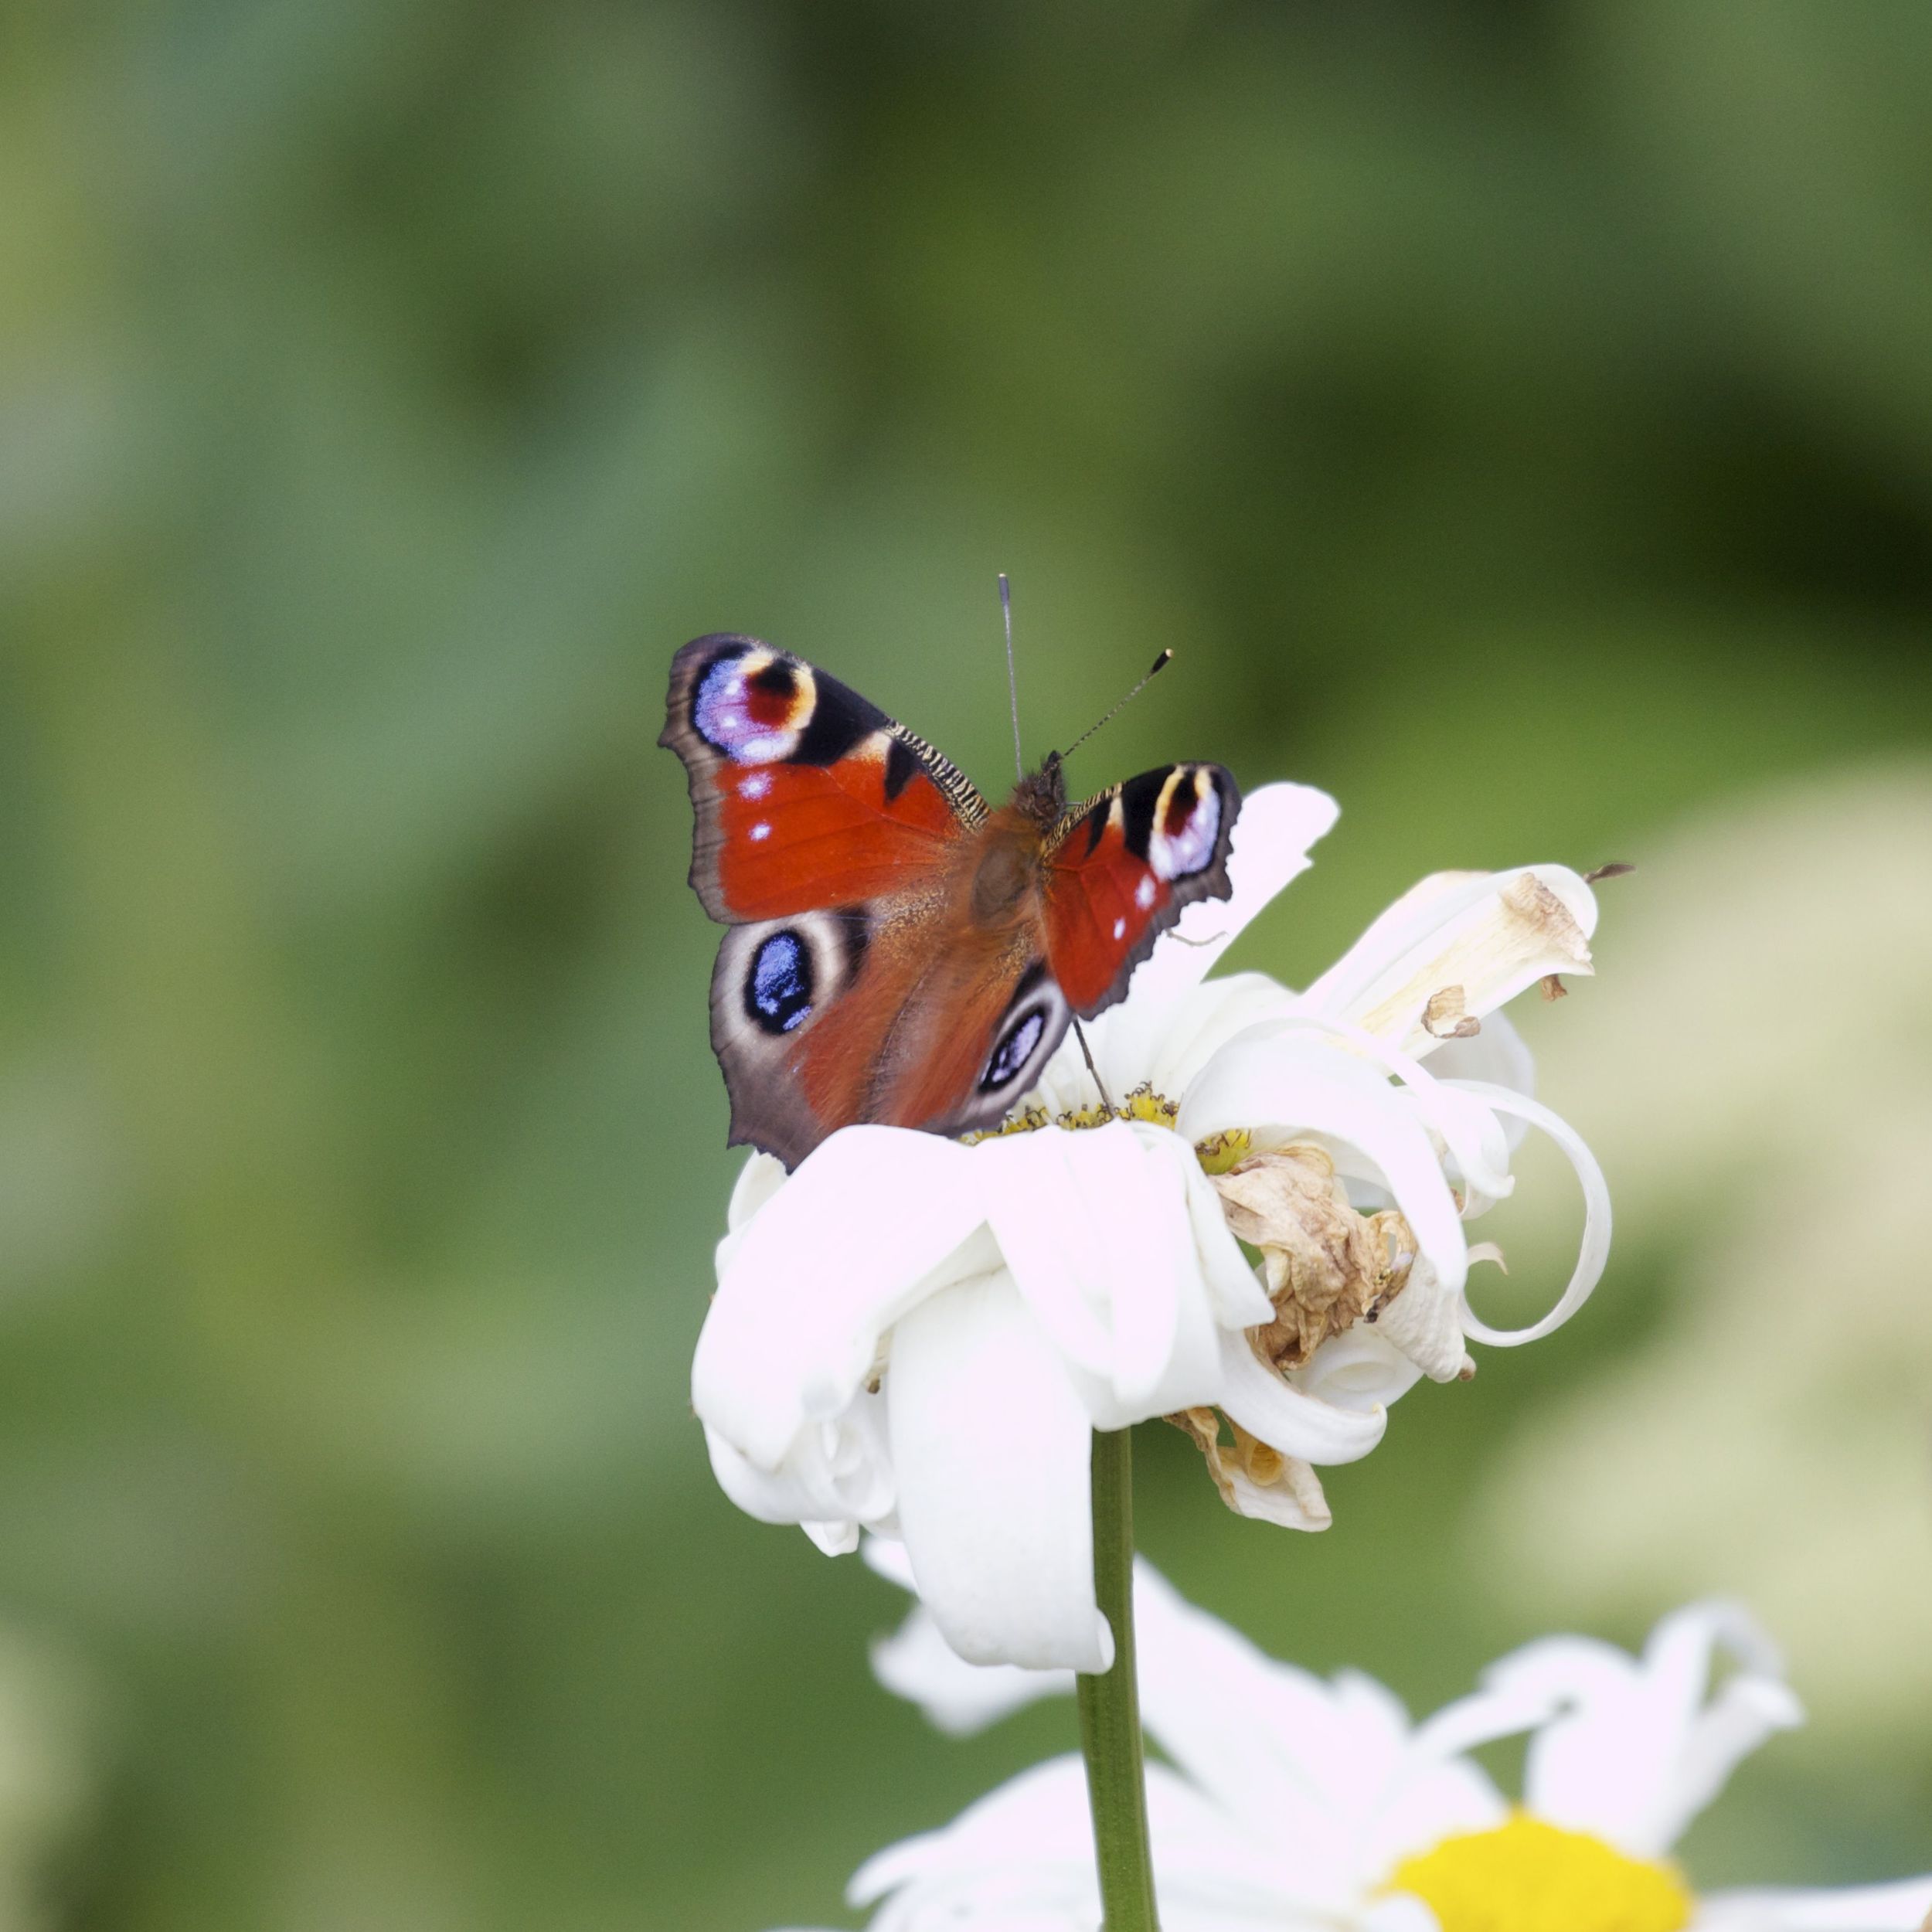  Peacock Butterfly,&nbsp;Lochwhinnoch, Scotland 